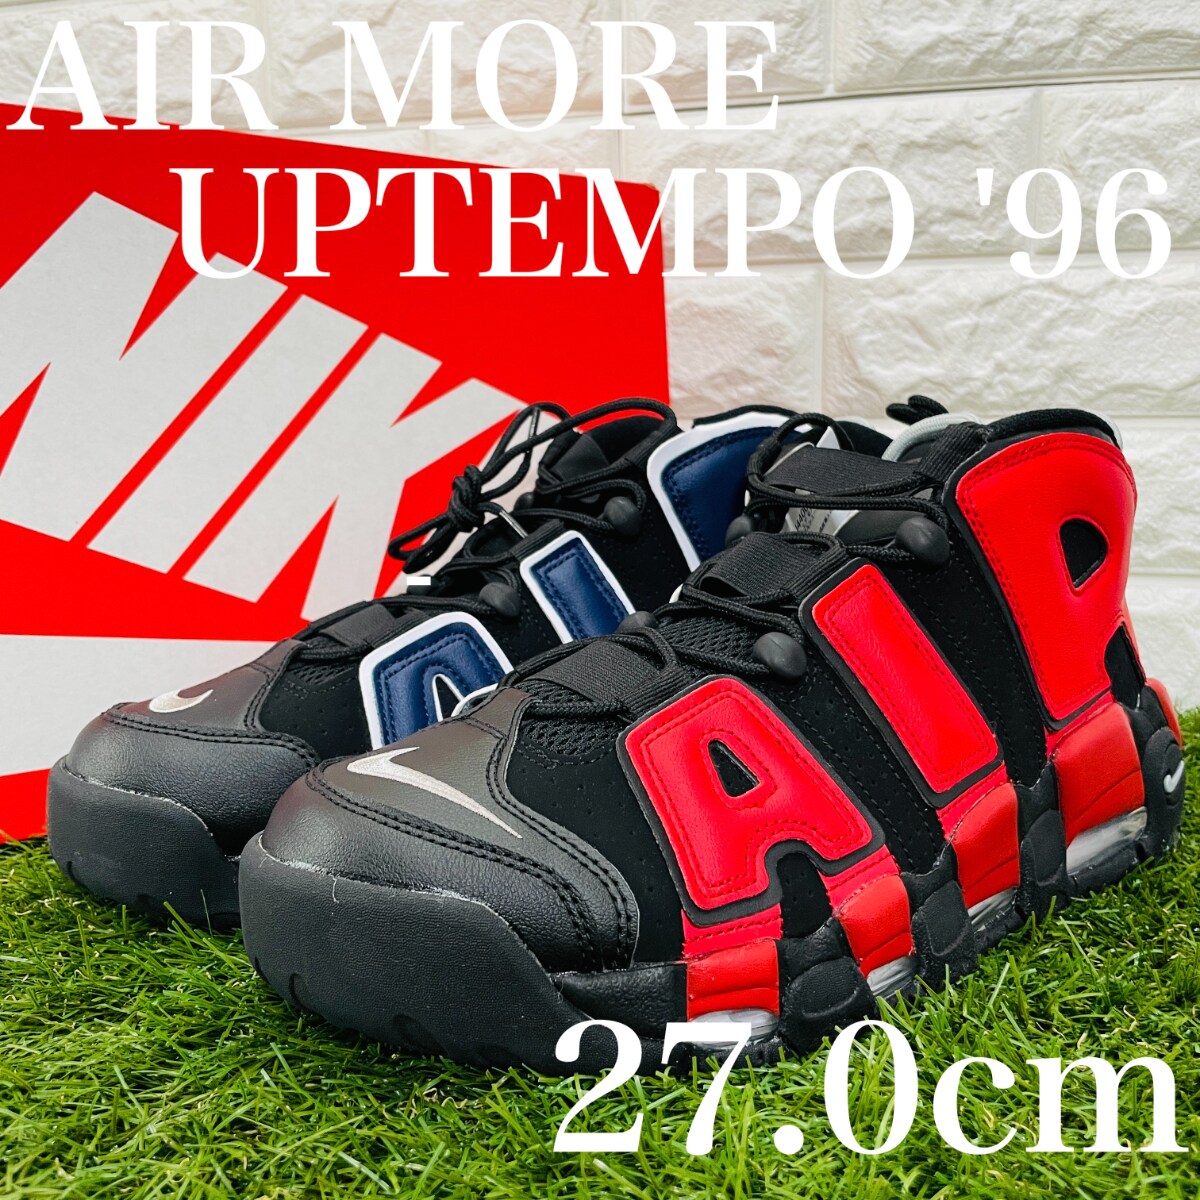 27 0cm ナイキ エア モア アップテンポ 96 Nike Air More Uptempo 96 モアテン メンズシューズ スニーカー 青赤黒のフリマ商品 Kante Komehyo